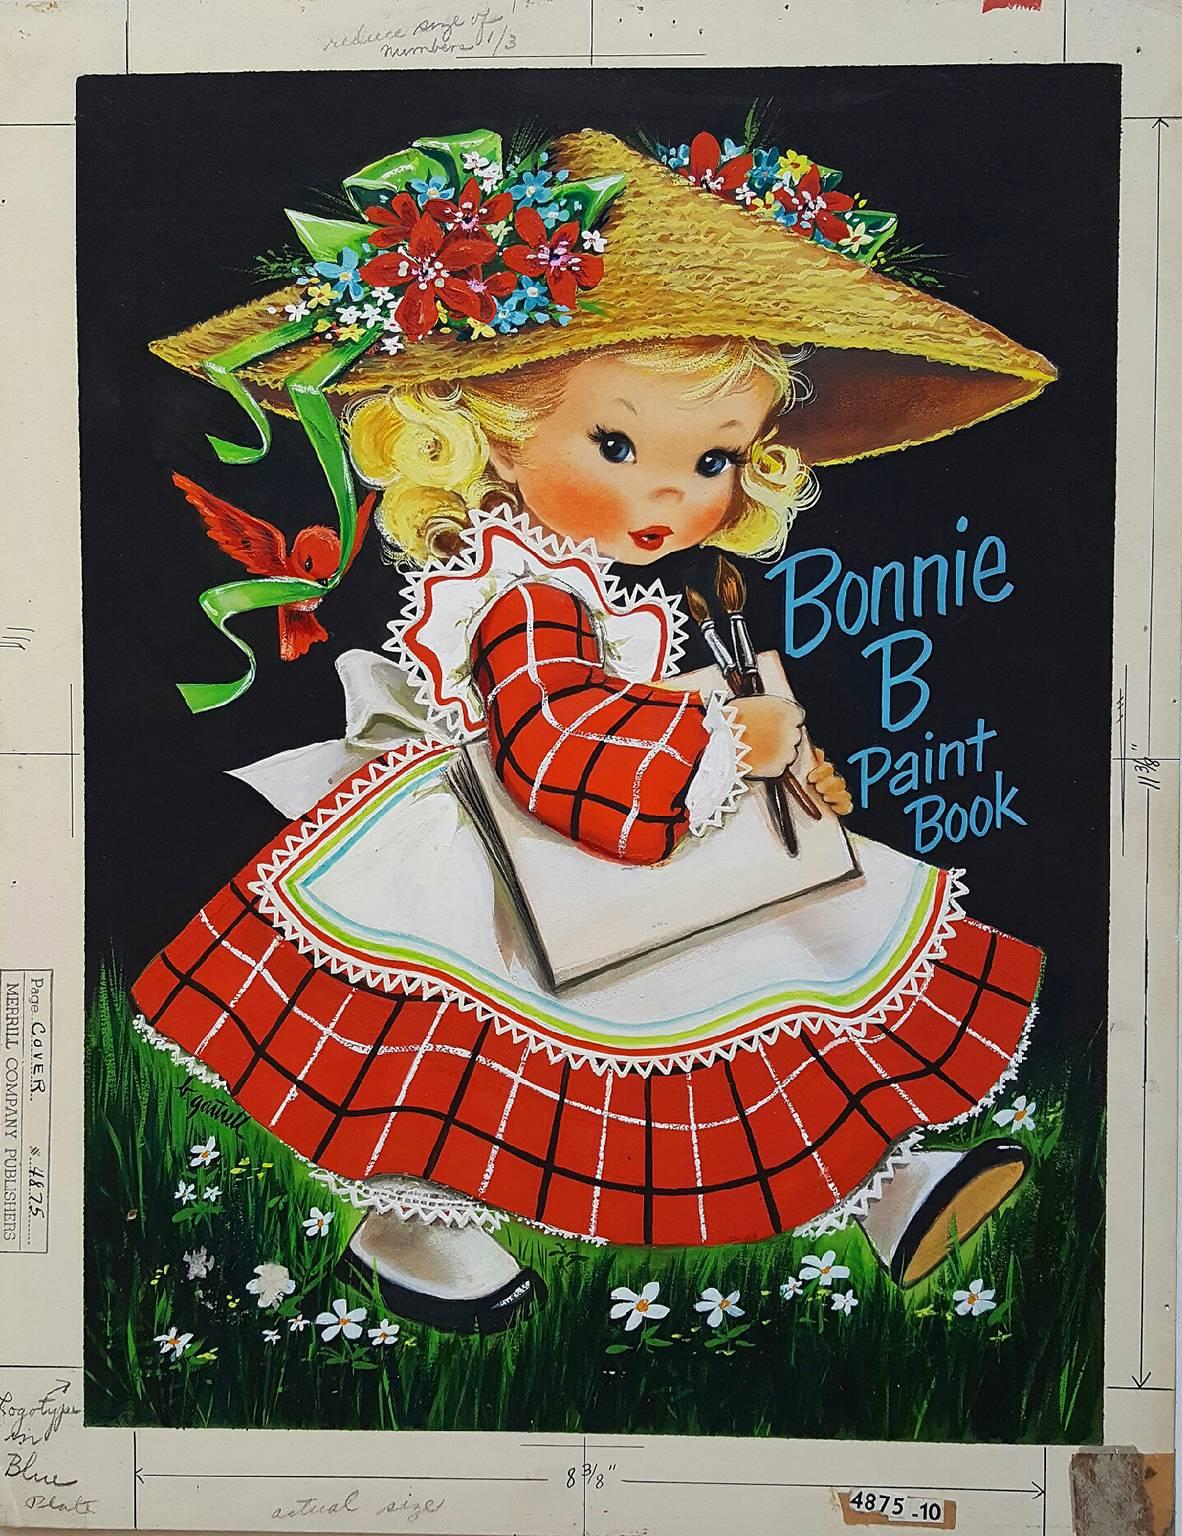 Bonnie B. Paint Book Cover - Painting by Elizabeth Voss